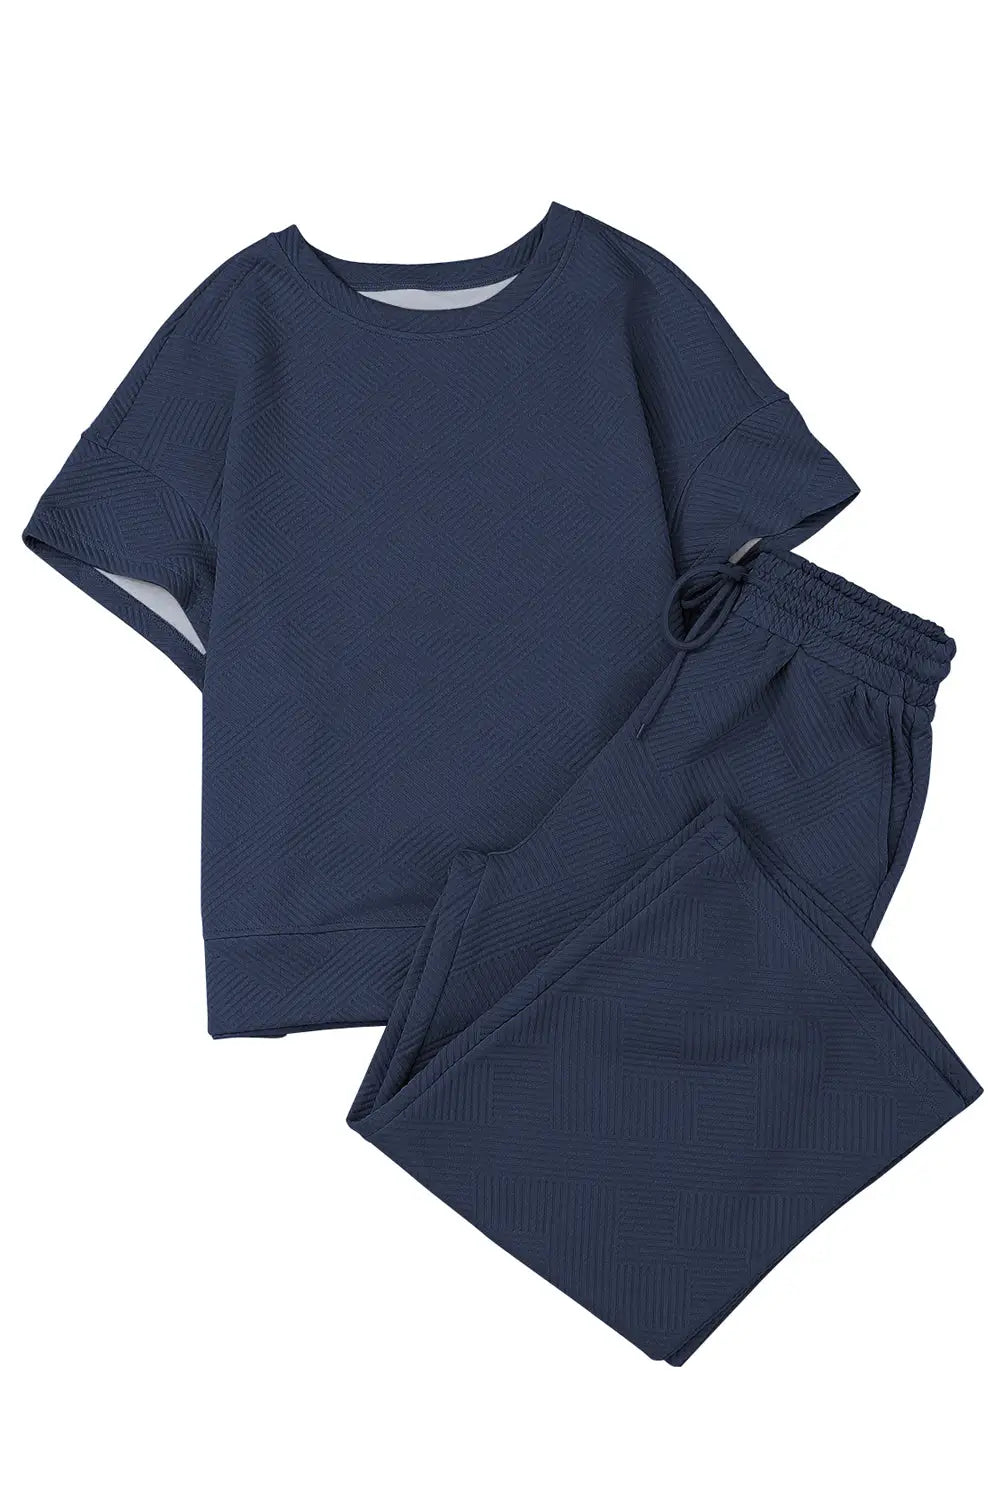 Navy blue textured loose fit t shirt and drawstring pants set - loungewear